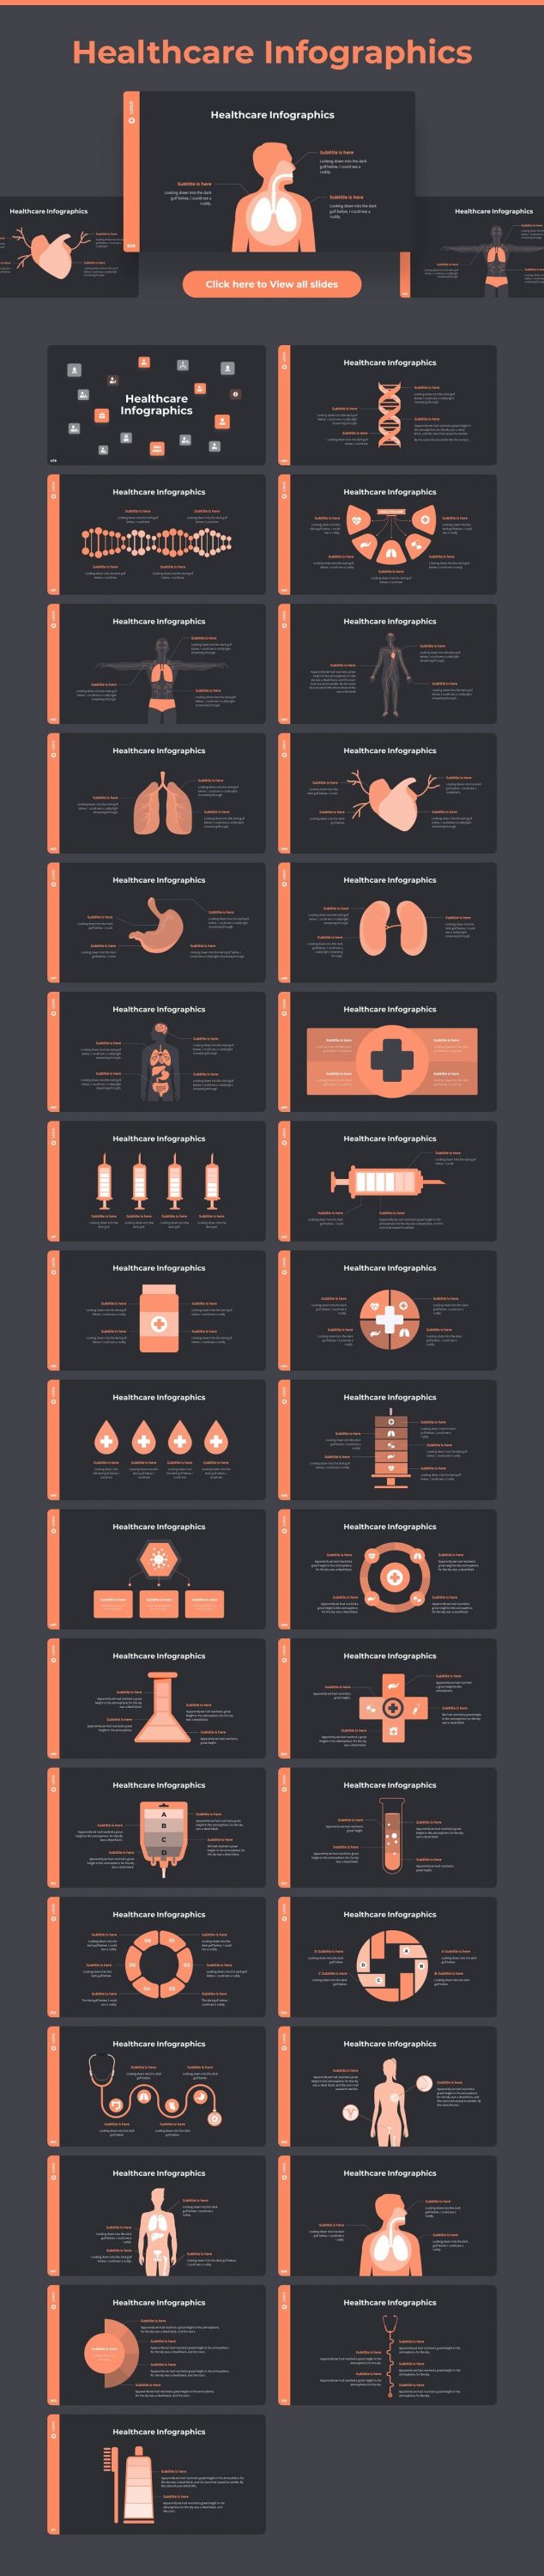 Healthcare infographic Dark theme. Pitch Deck & Presentation V3.0.